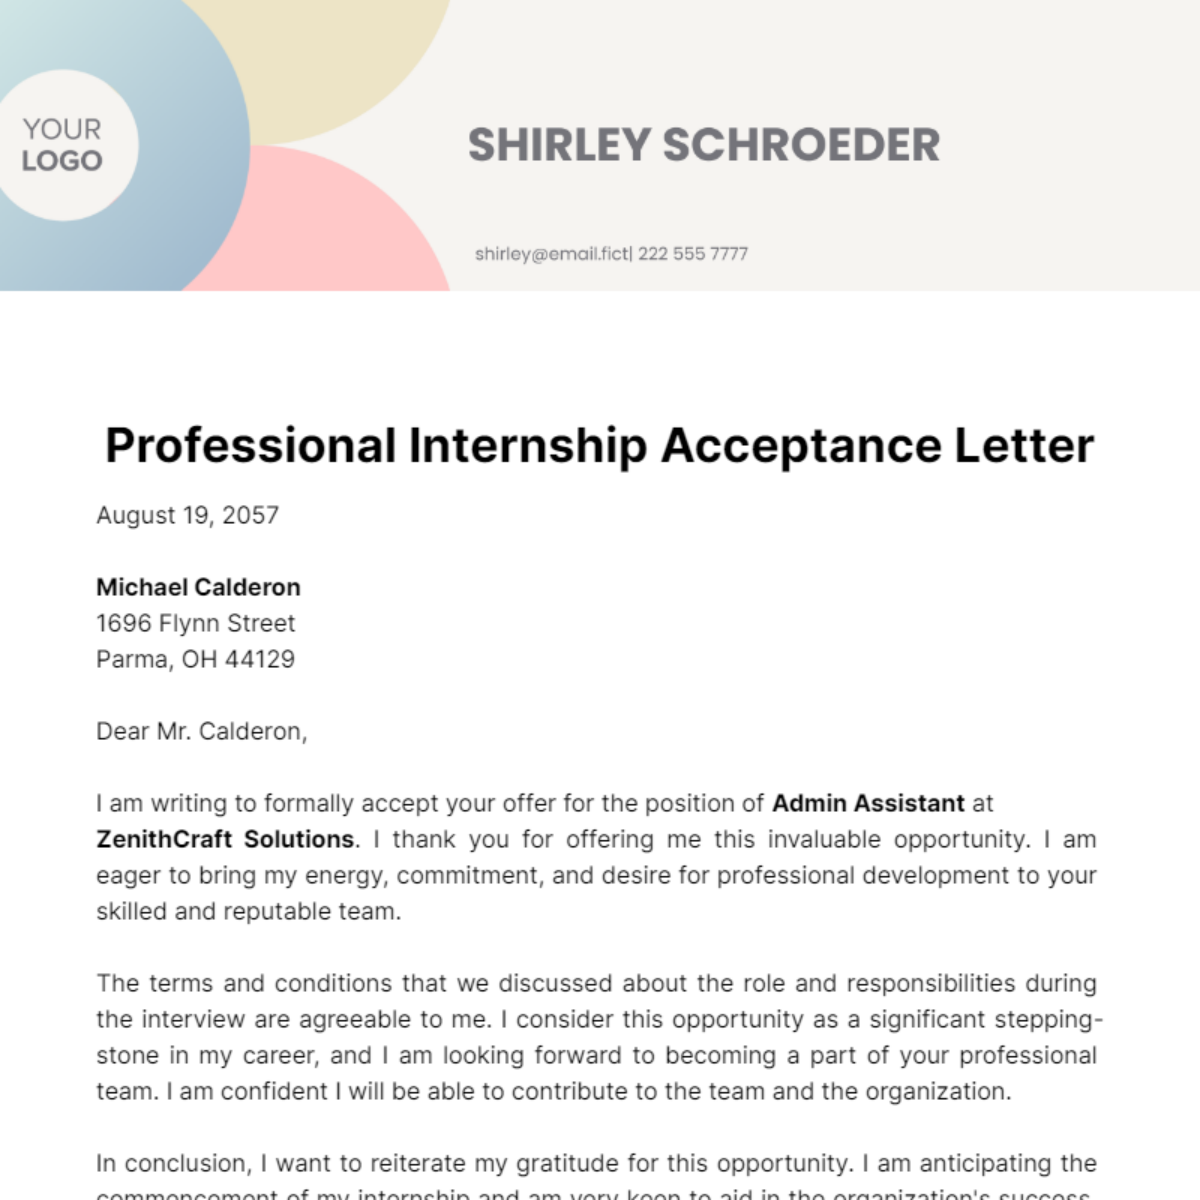 Professional Internship Acceptance Letter Template